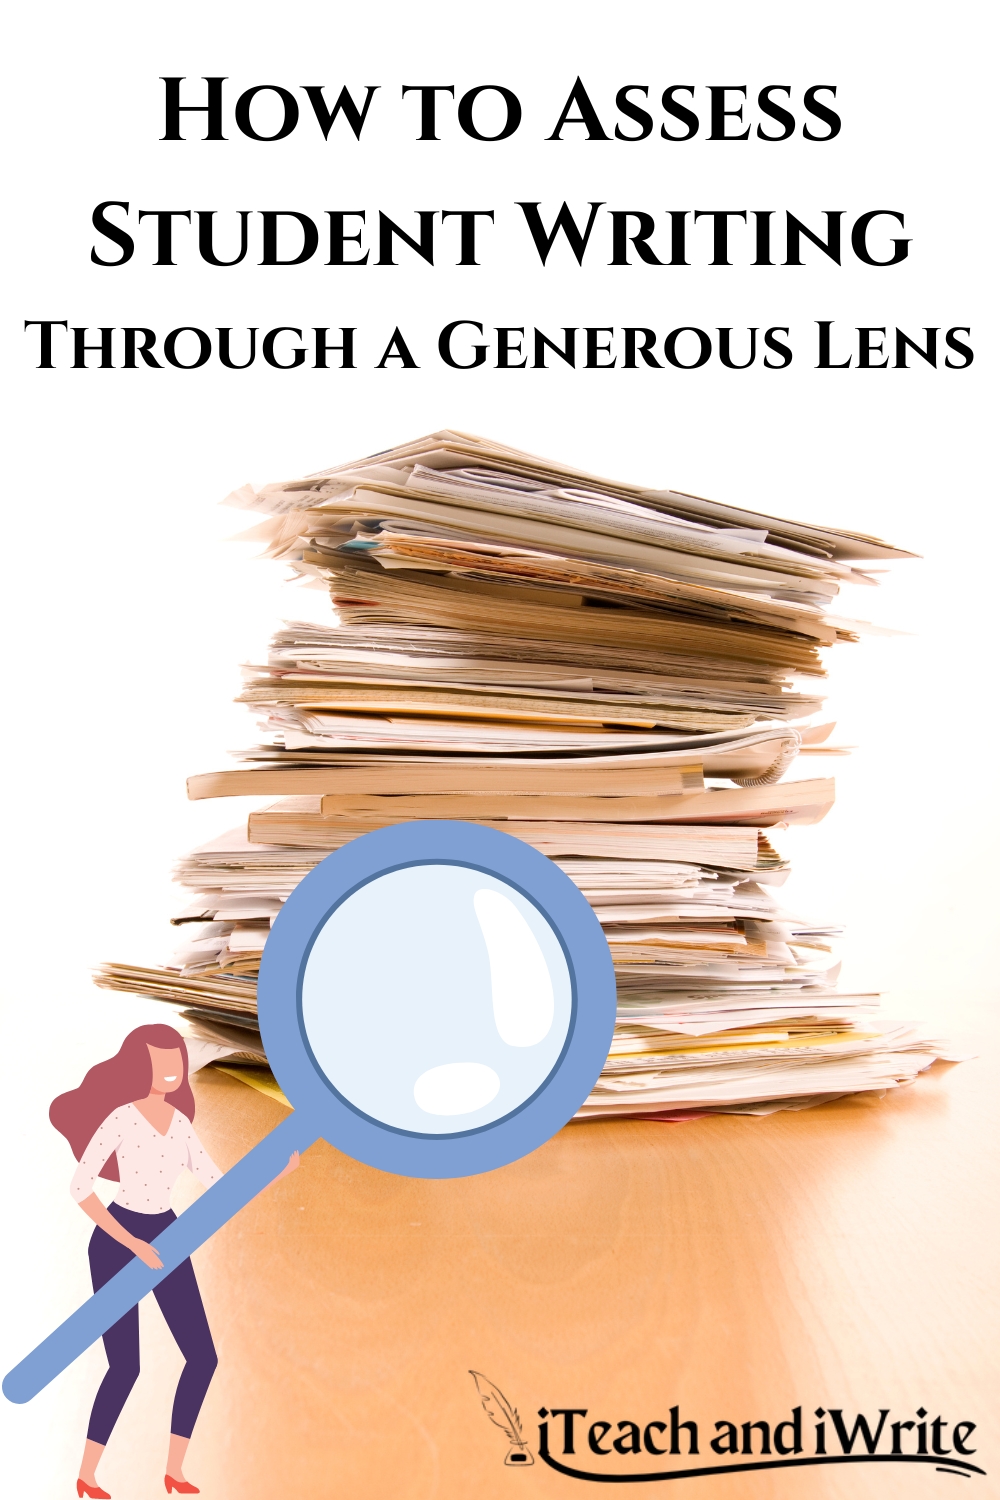 Assessing Writing Through a Generous Lens